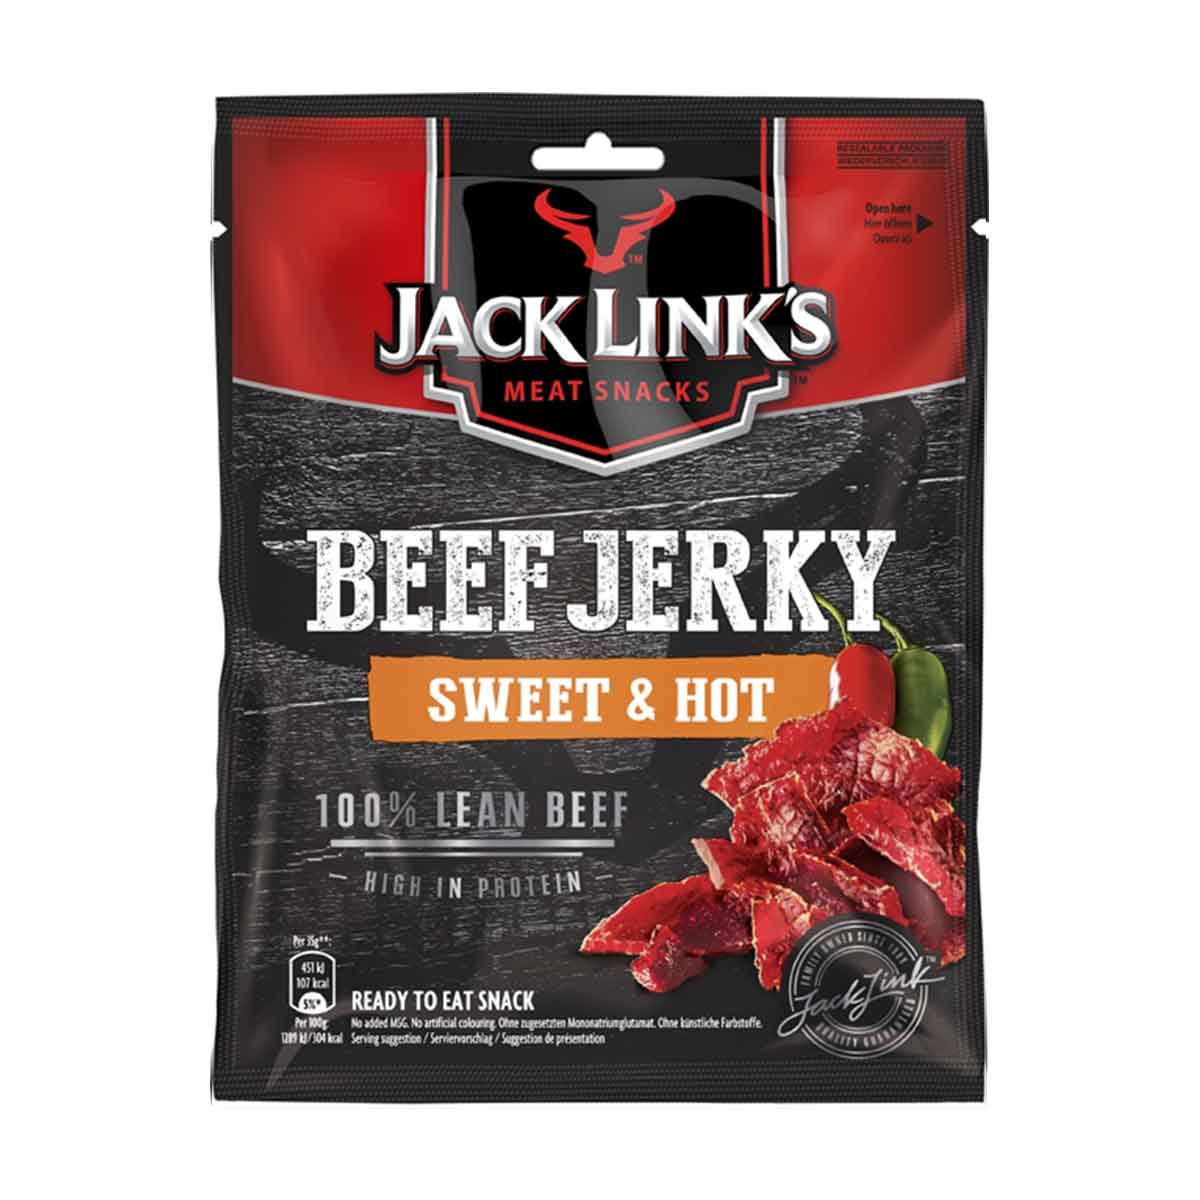 Beef Jerky - SweetHot dried beef - 70g